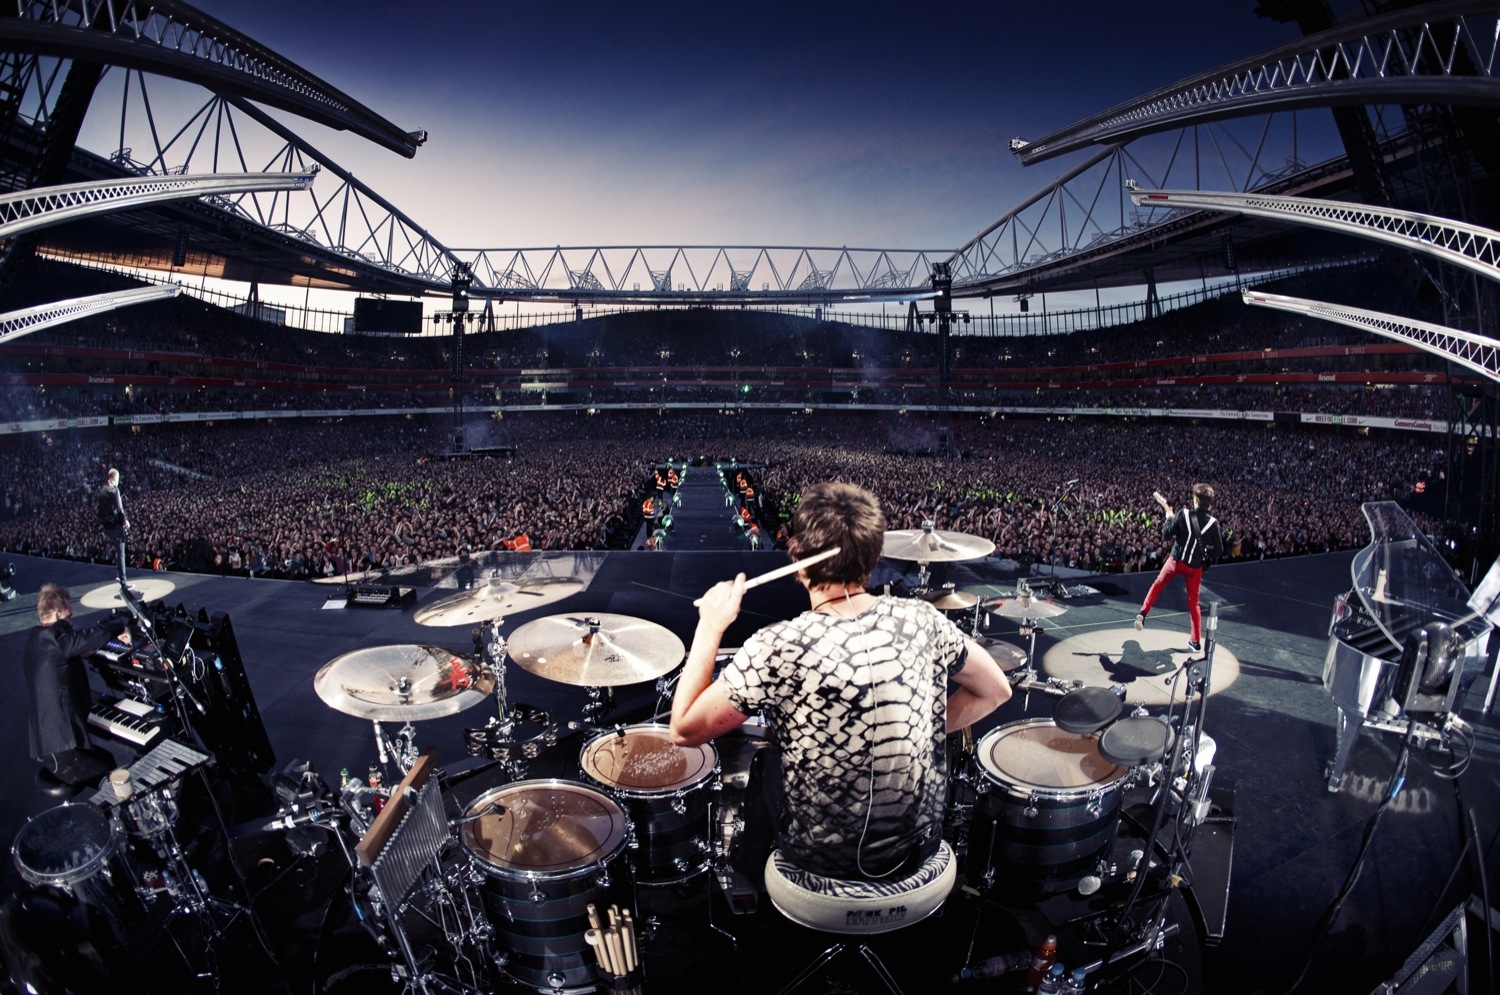 Scene музыка. Концерт Muse Park Live 2016. Muse стадион концерт. Барабанщик Muse. Барабанщик на концерте.